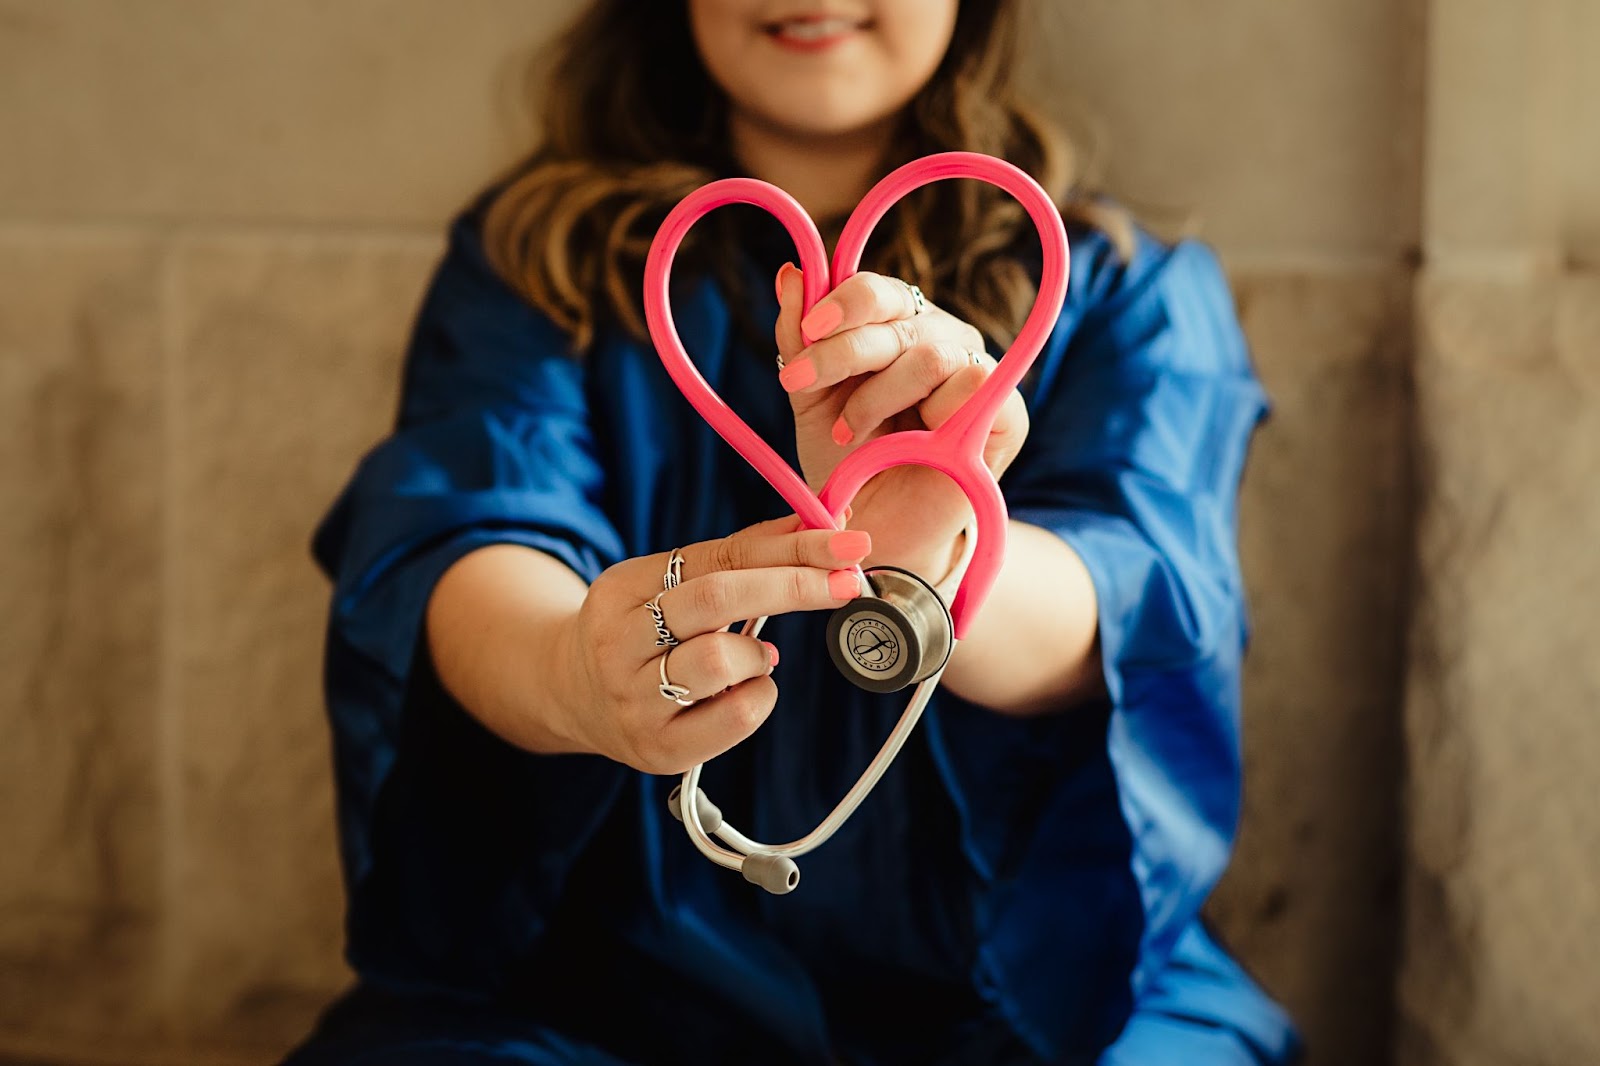 post featured image of nurse holding stethoscope